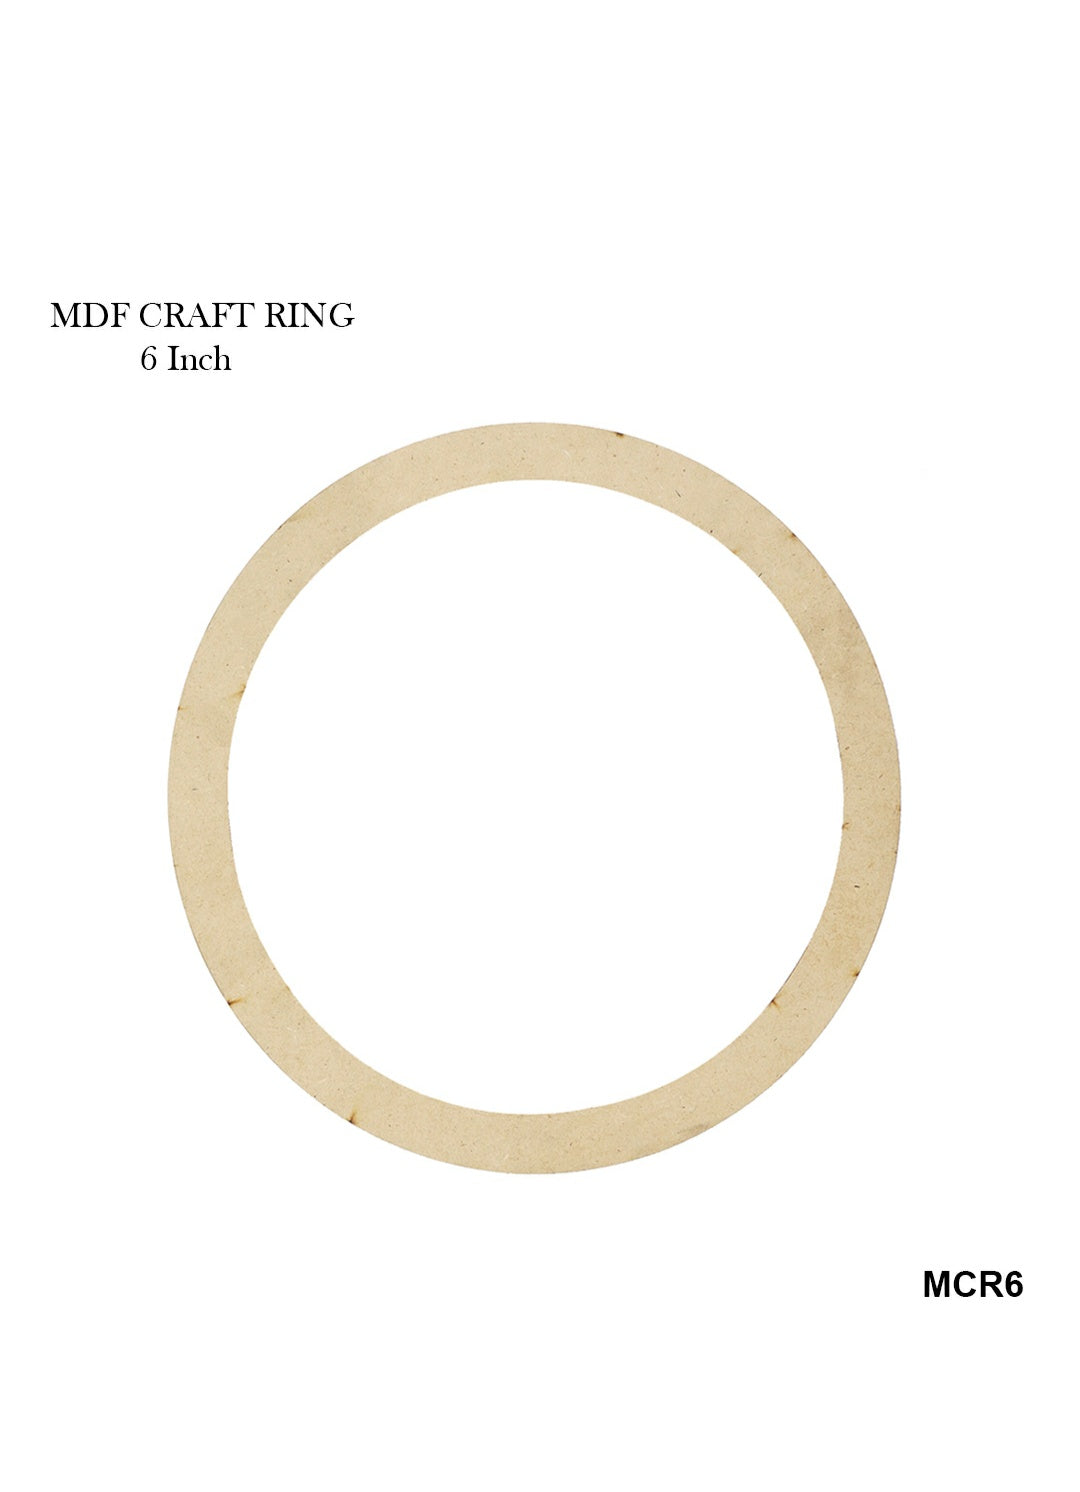 Mdf Craft Ring Round 6Inch X1/2Inch  Mcr6 | INKARTO